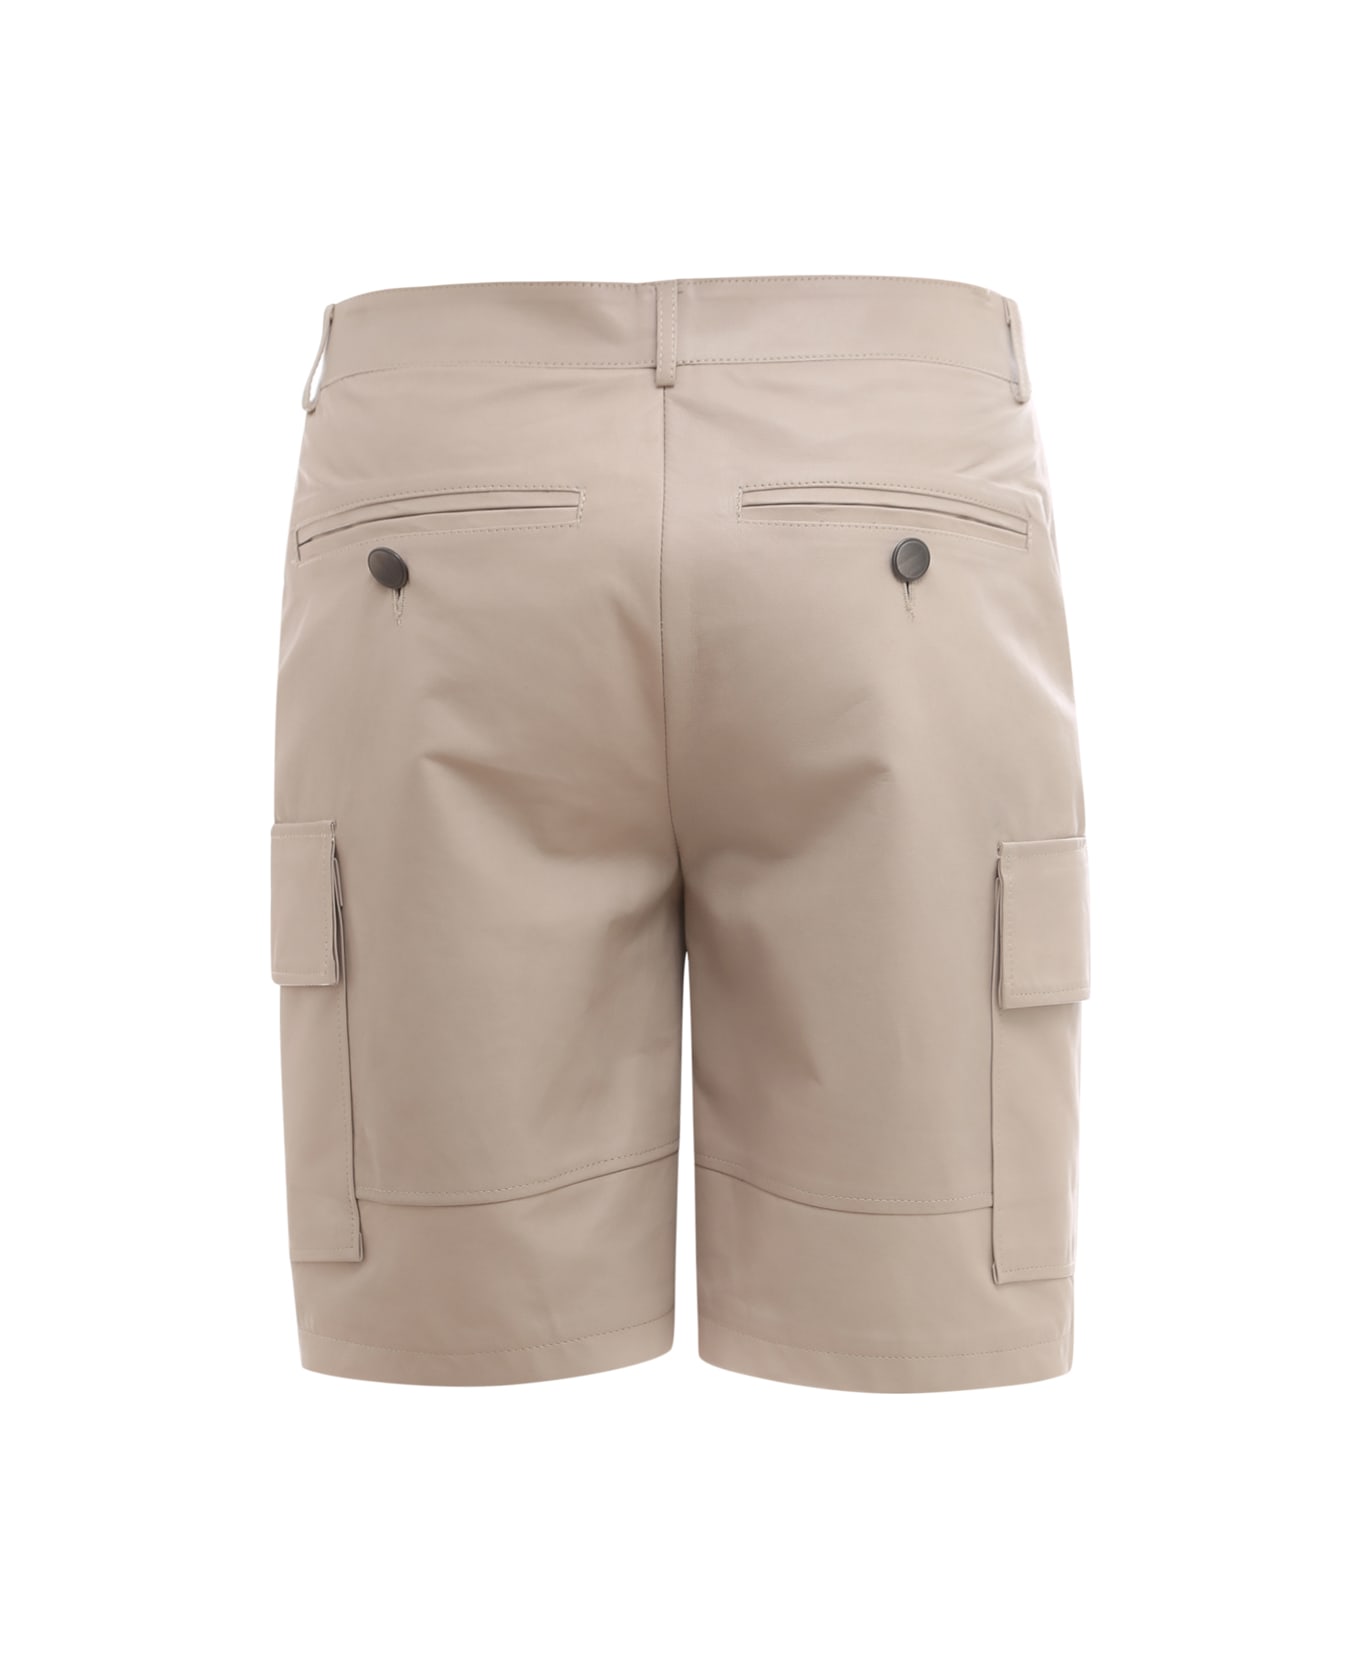 DFour Bermuda Shorts - Beige ショートパンツ